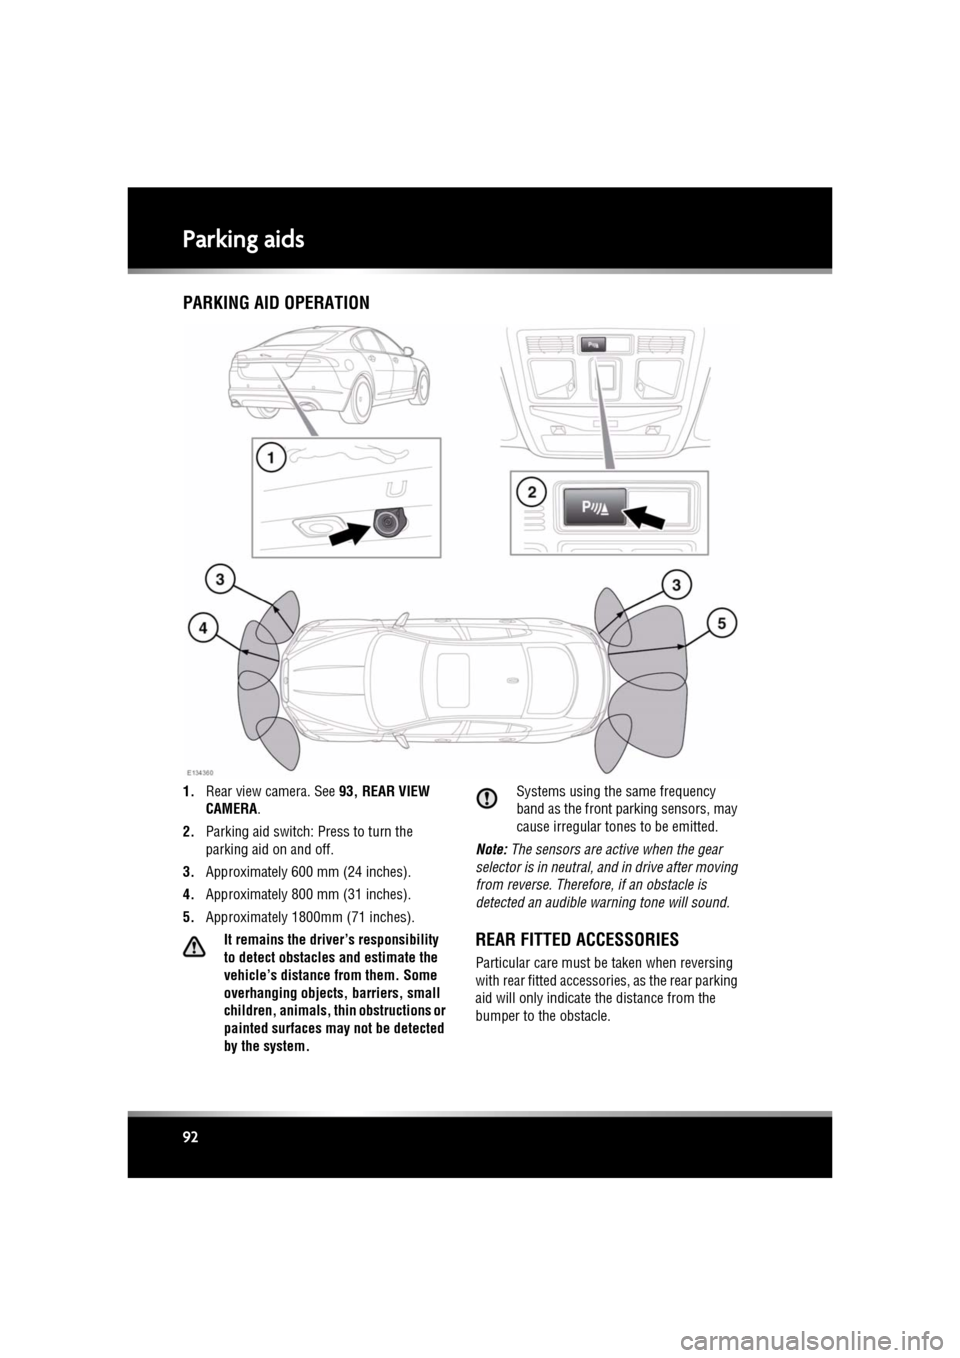 JAGUAR XF 2010 1.G Owners Manual L
(FM8) SEMCON JLR OWNER GUIDE VER 1.00  EURO
LANGUAGE: english-en; MARQUE: jaguar; MODEL: XF
Parking aids
92
Parking aidsPARKING AID OPERATION
1. Rear view camera. See  93, REAR VIEW 
CAMERA .
2. Par